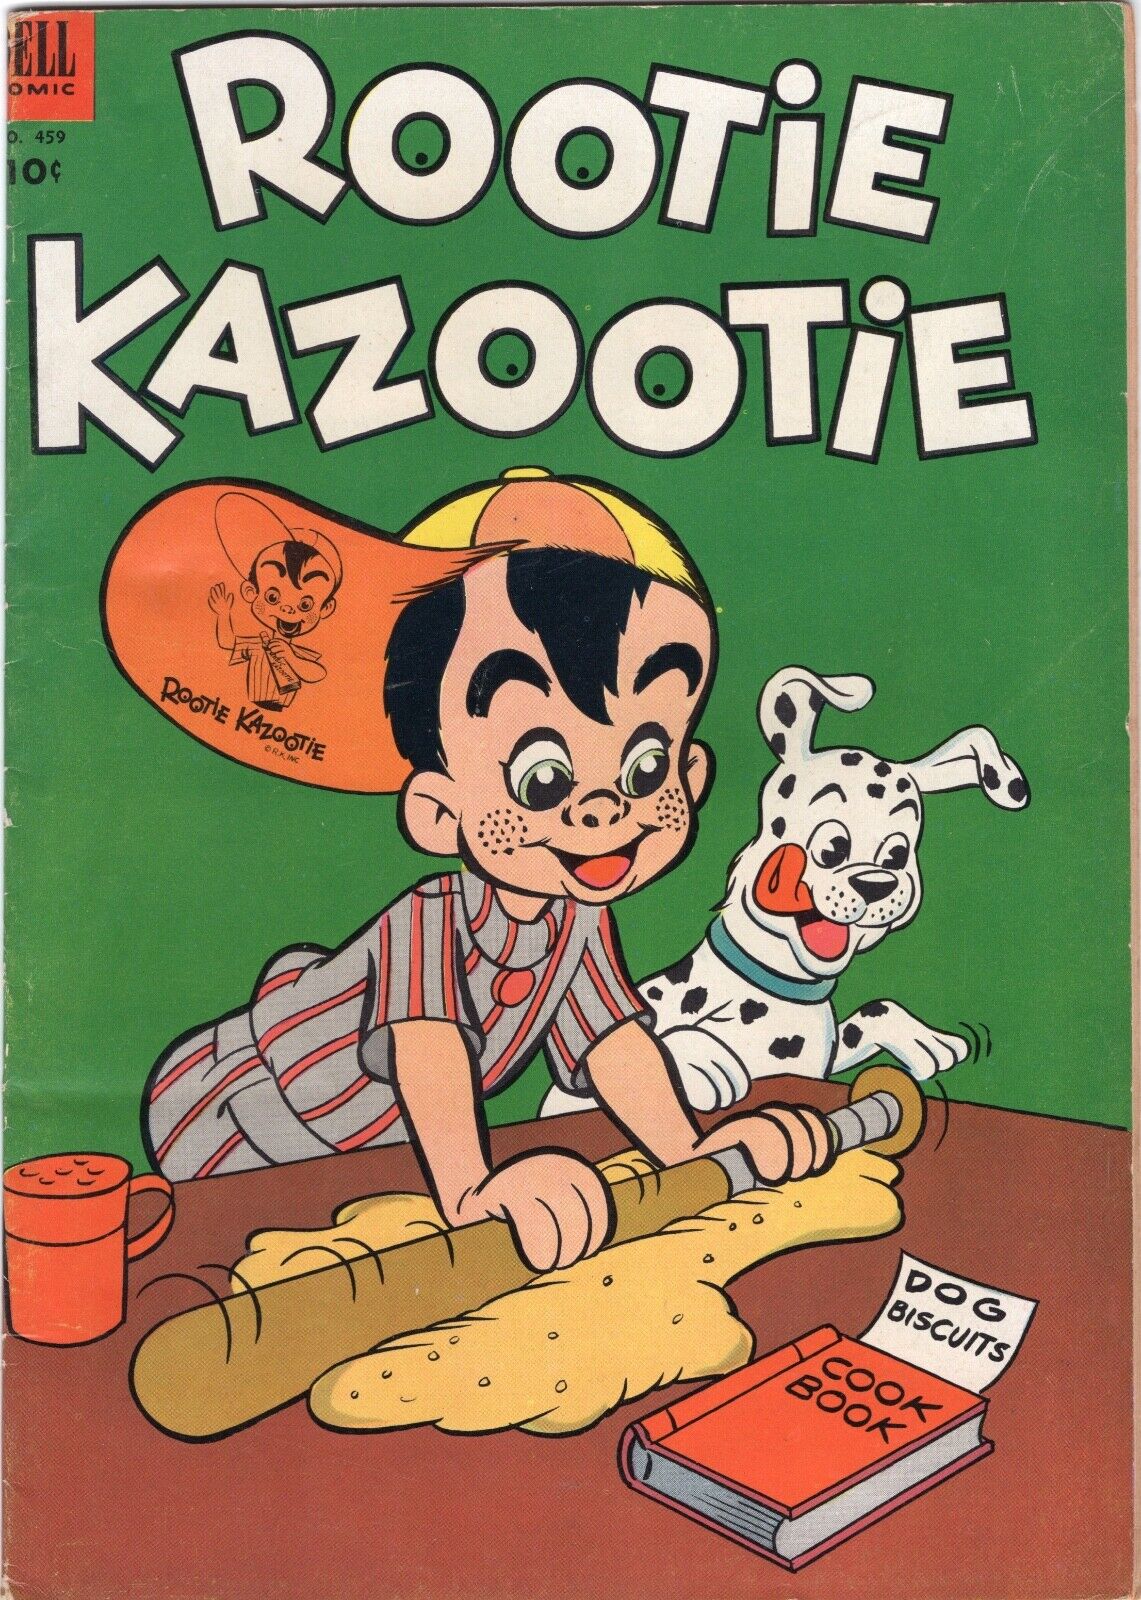 Dell Comics Rootie Kazootie Volume 1 Book #459 4/1953 Very Nice High Mid Grade